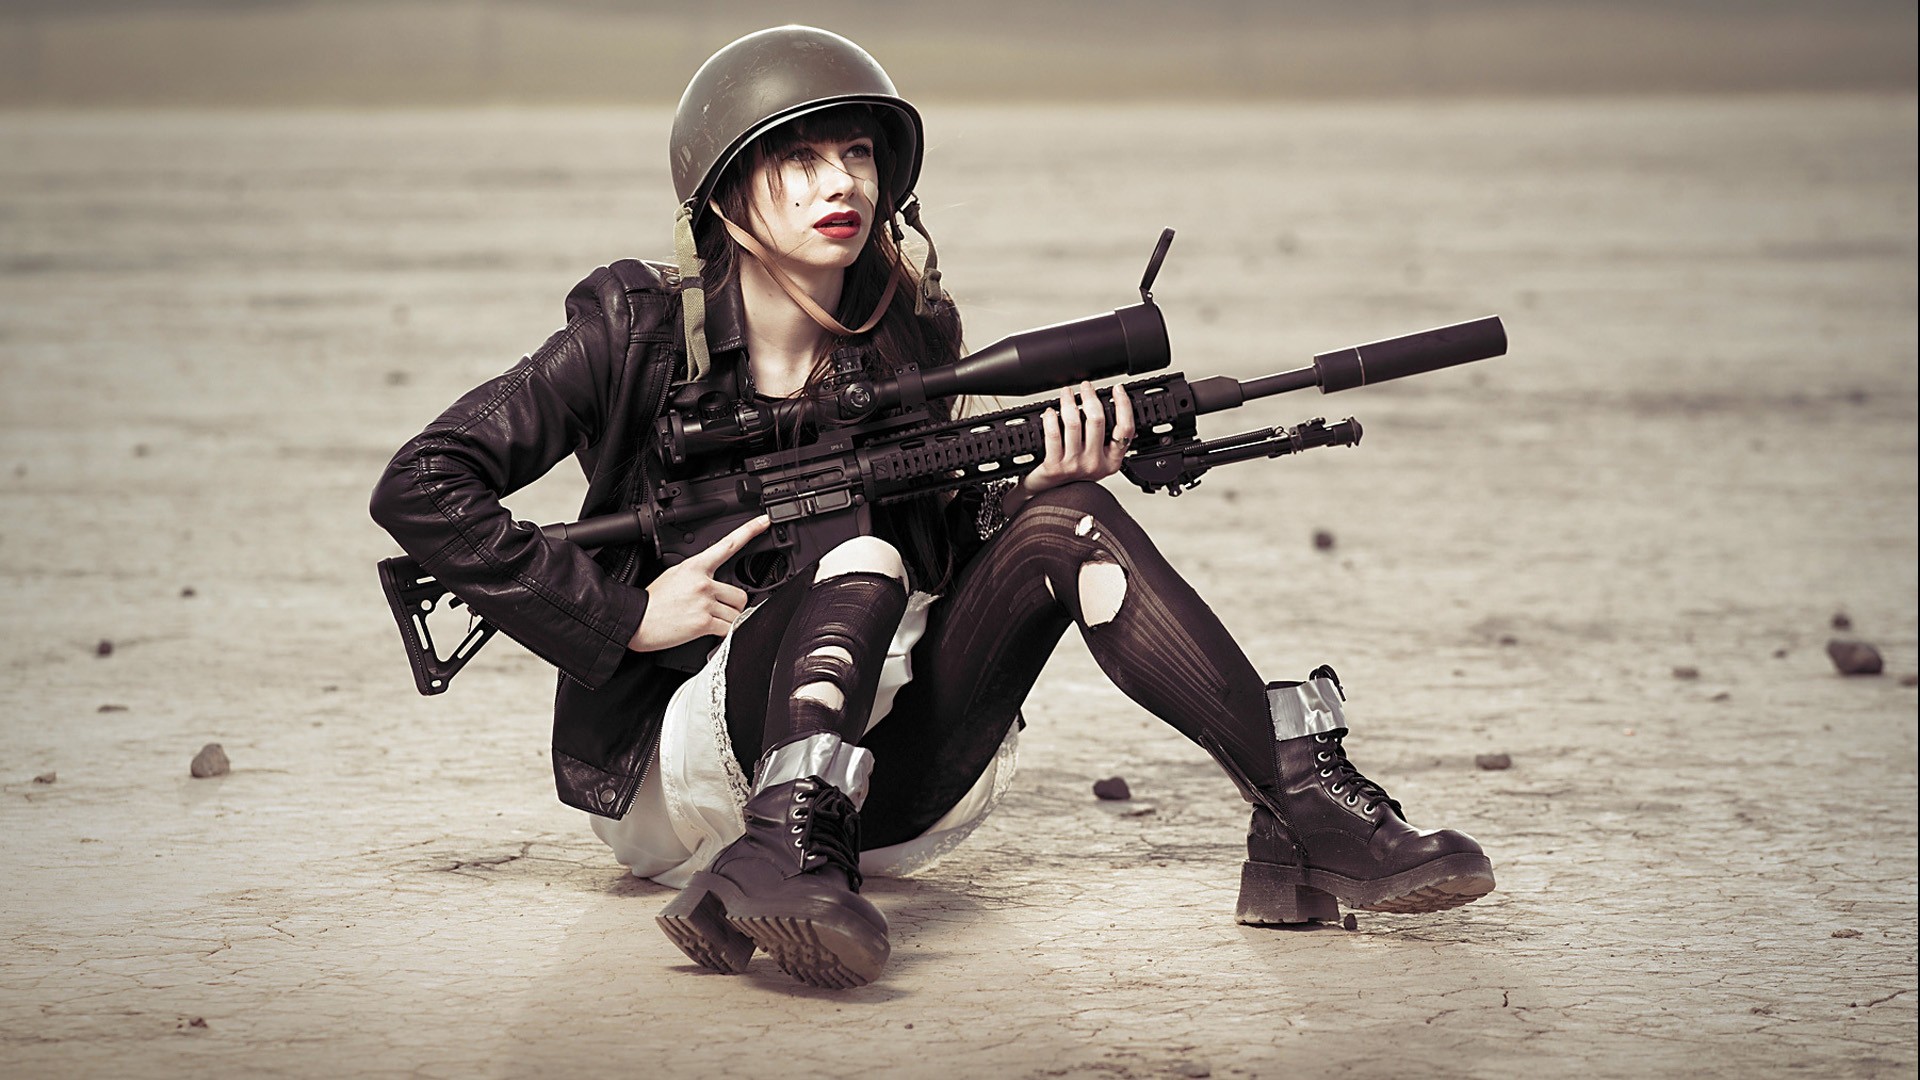 1920x1080 girl with gun